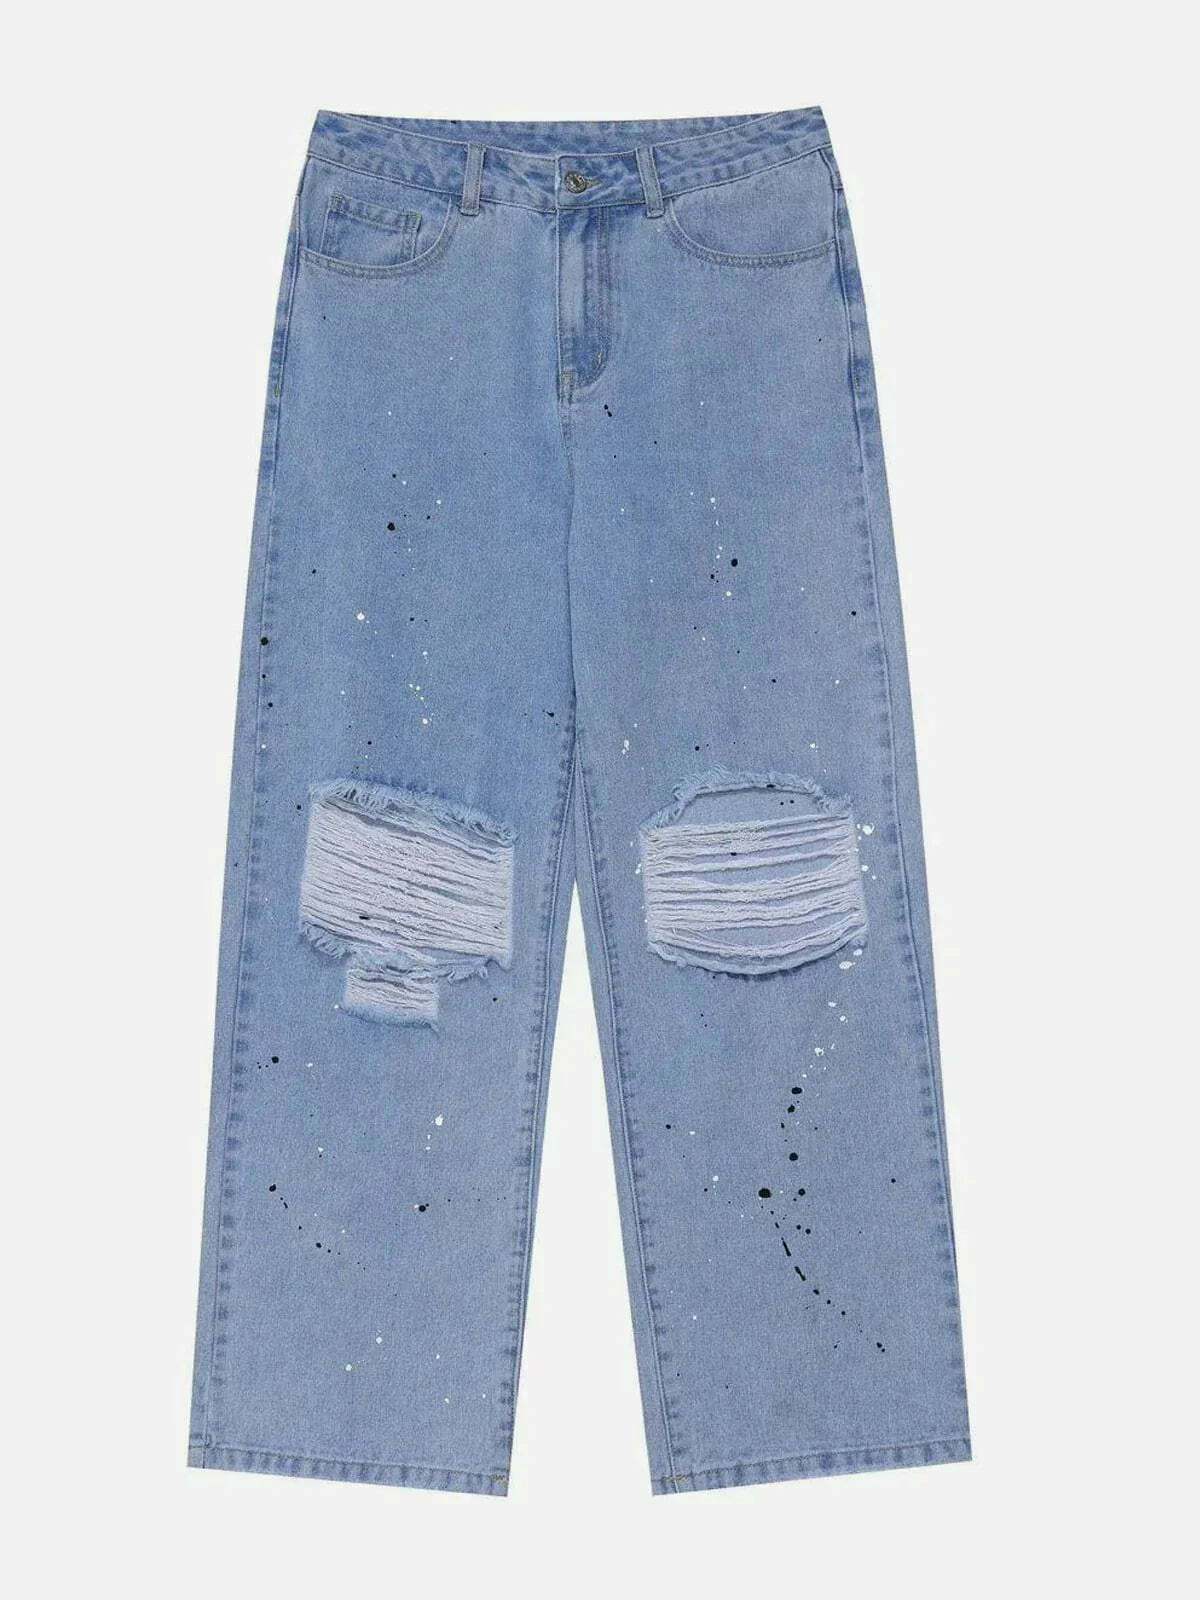 dynamic splash ink jeans edgy & vibrant streetwear 3964